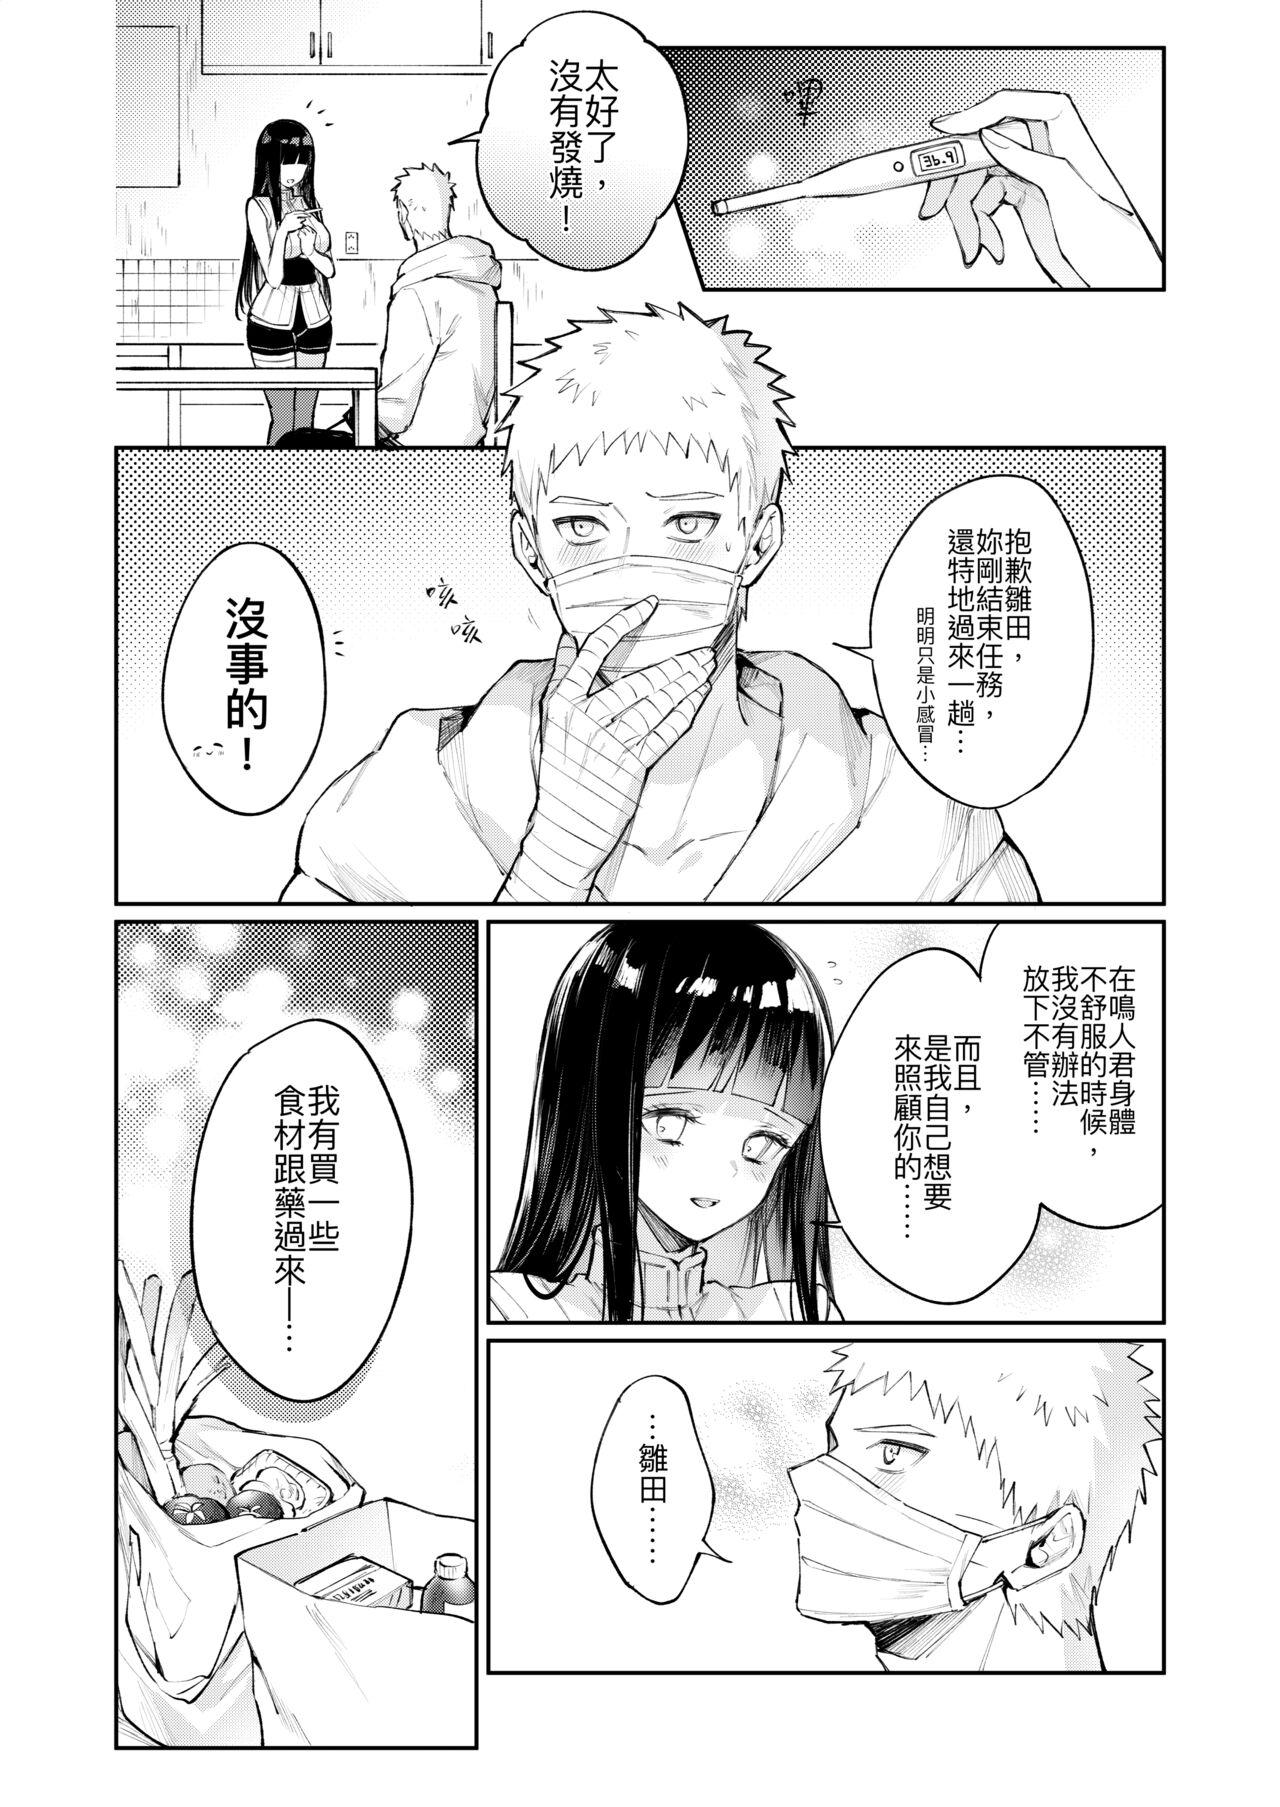 Ftvgirls 感冒 - Naruto Rico - Page 1